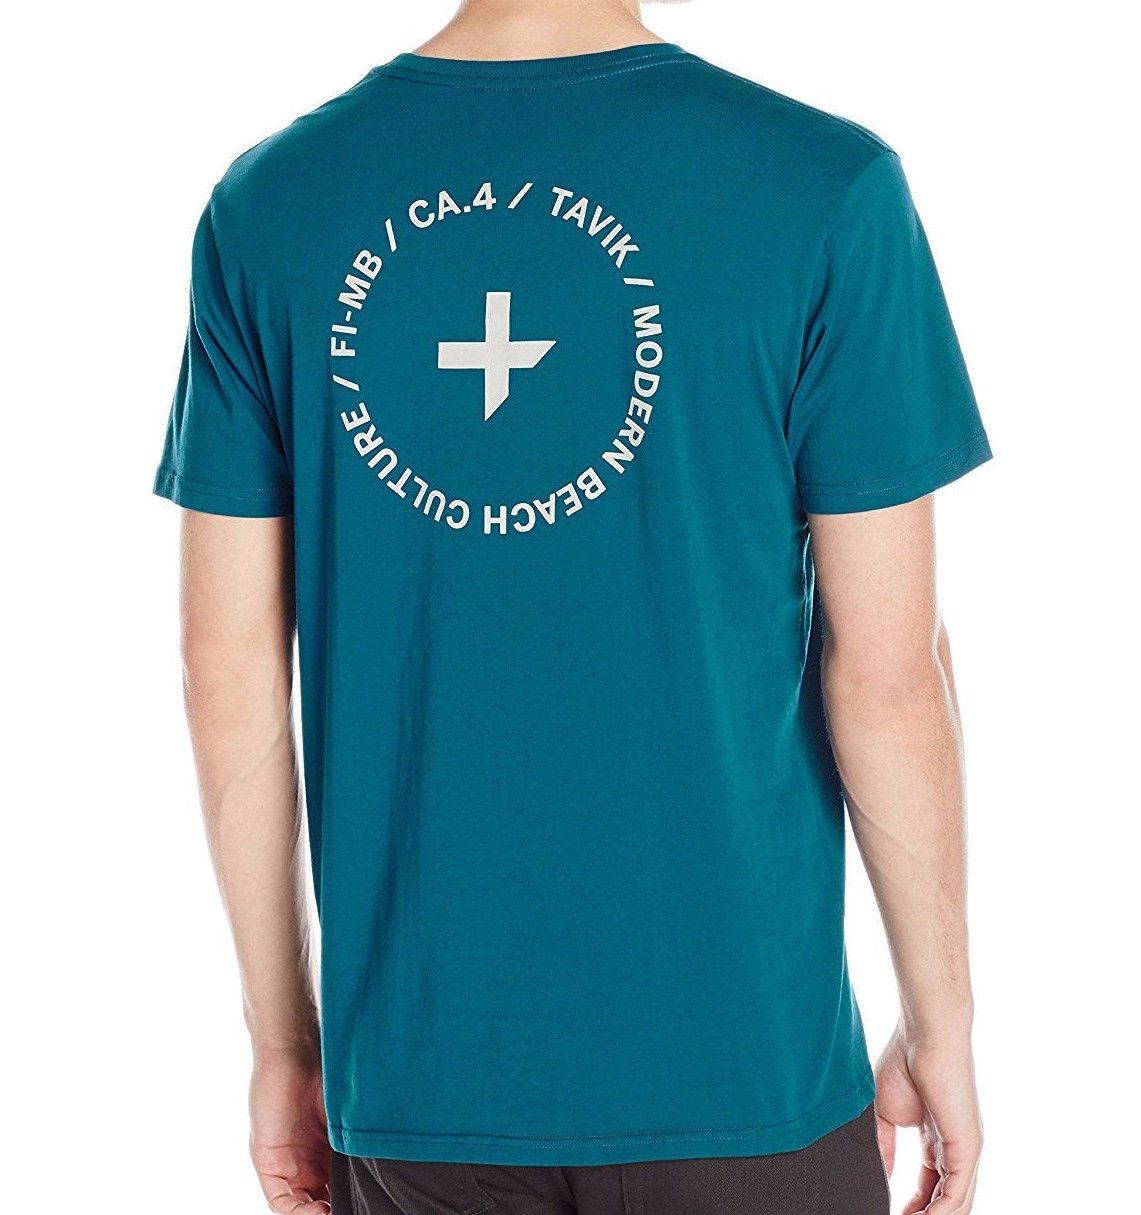 Tavik Men's Crew Neck Graphic Tee T-Shirt and similar items